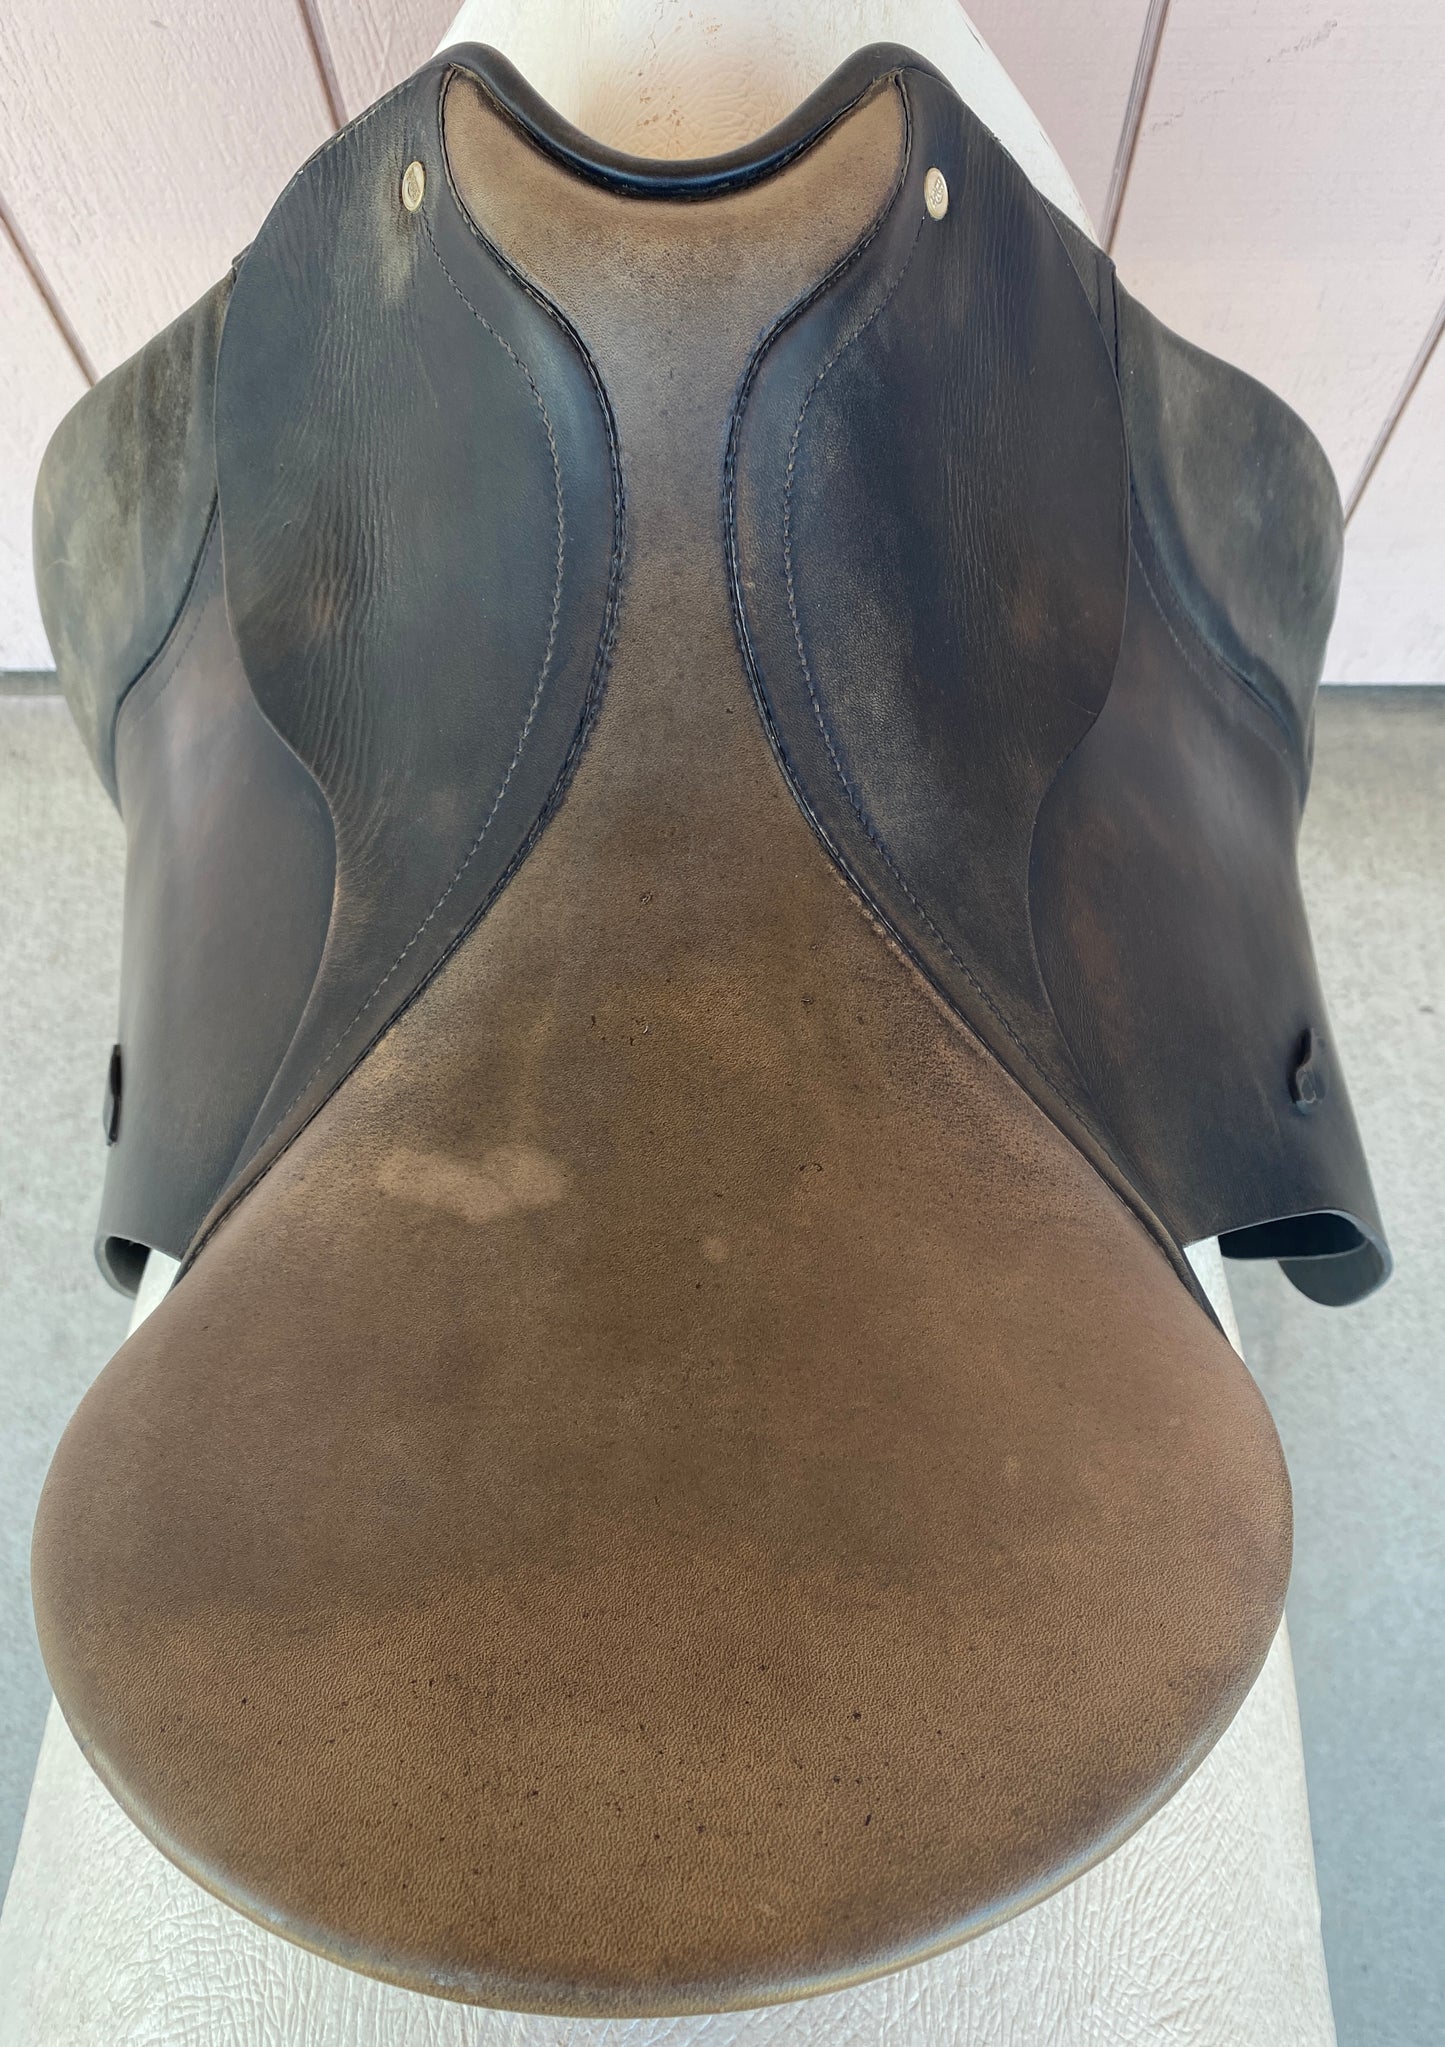 17” Passier Vector Dressage Saddle